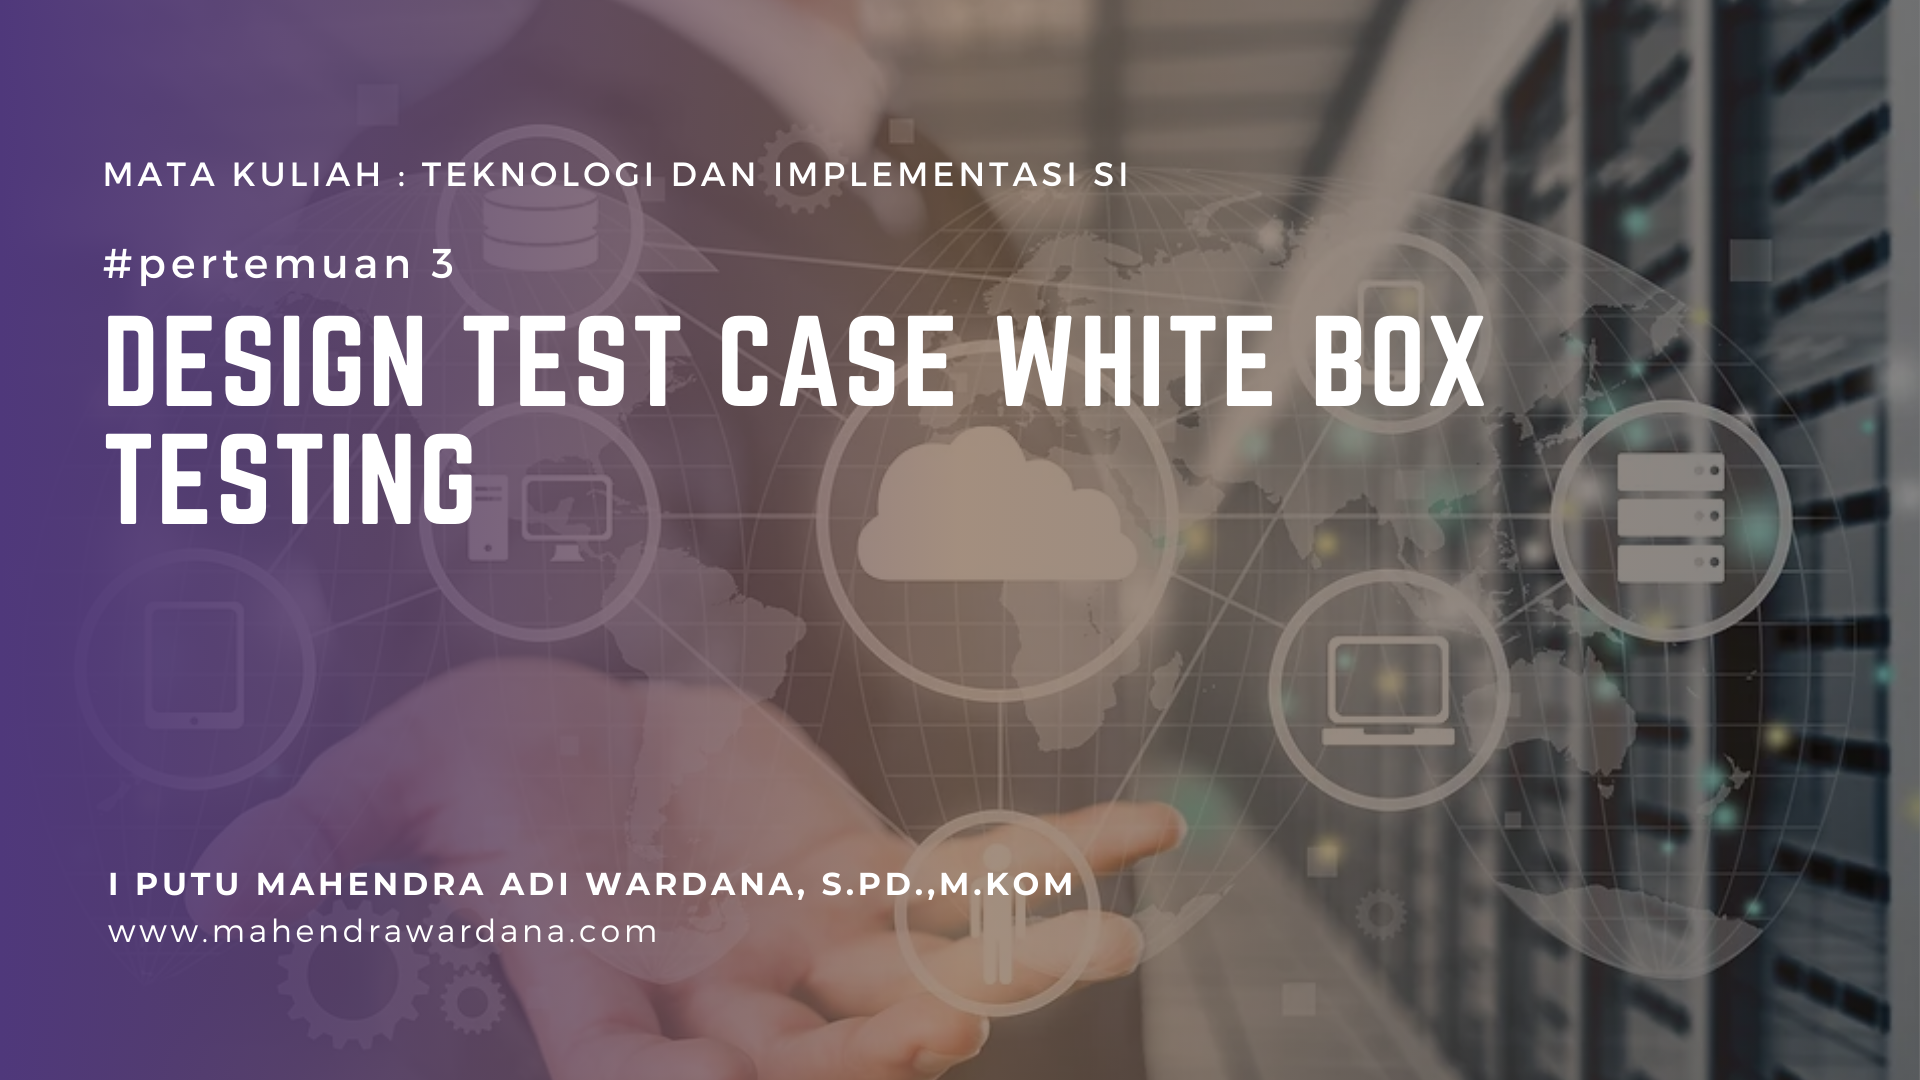 Pertemuan 3 - Design Test Case White Box Testing